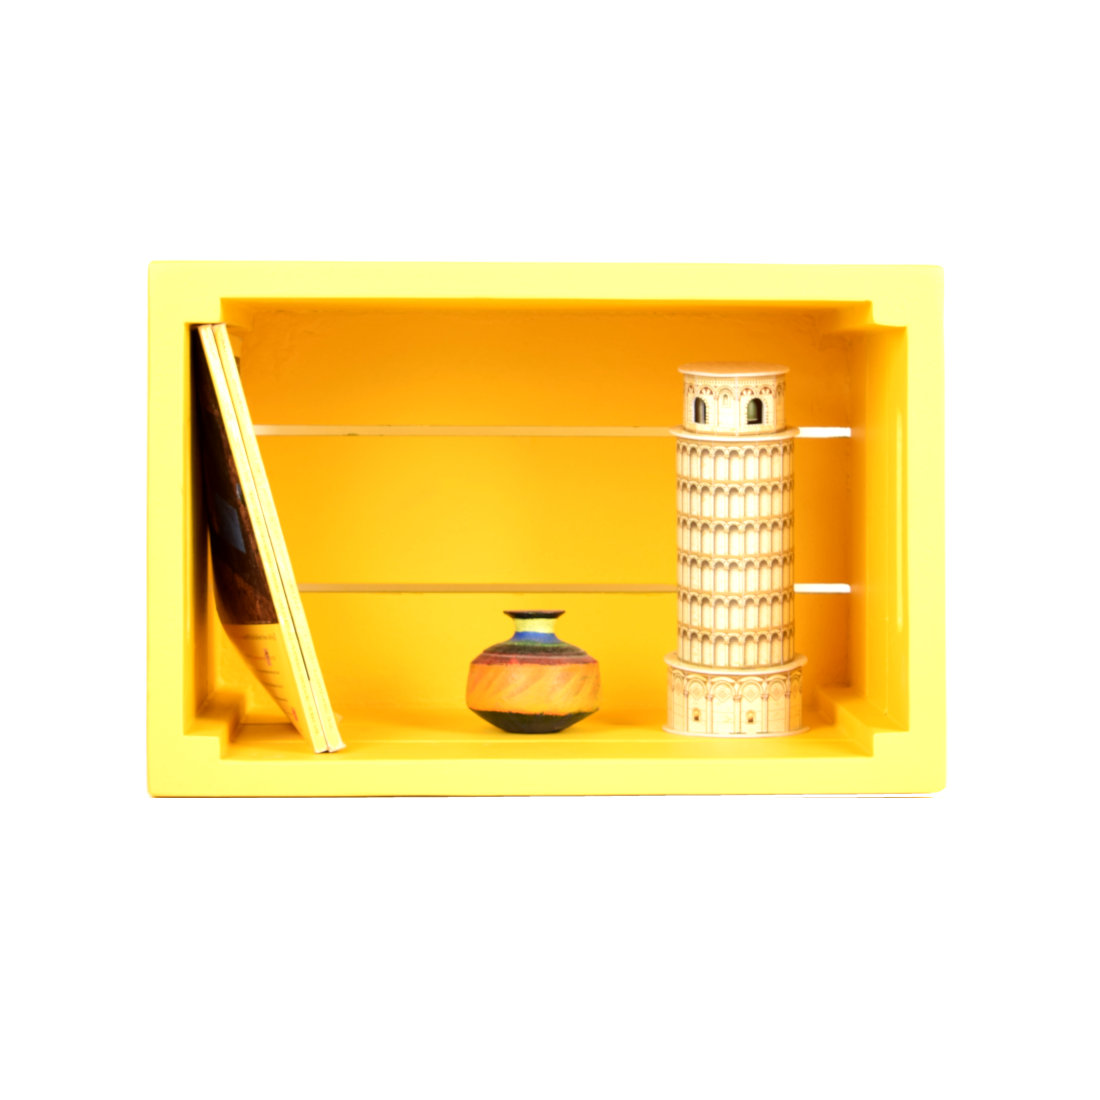 CustHum-Crate-multipurpose pallet crate box (yellow)